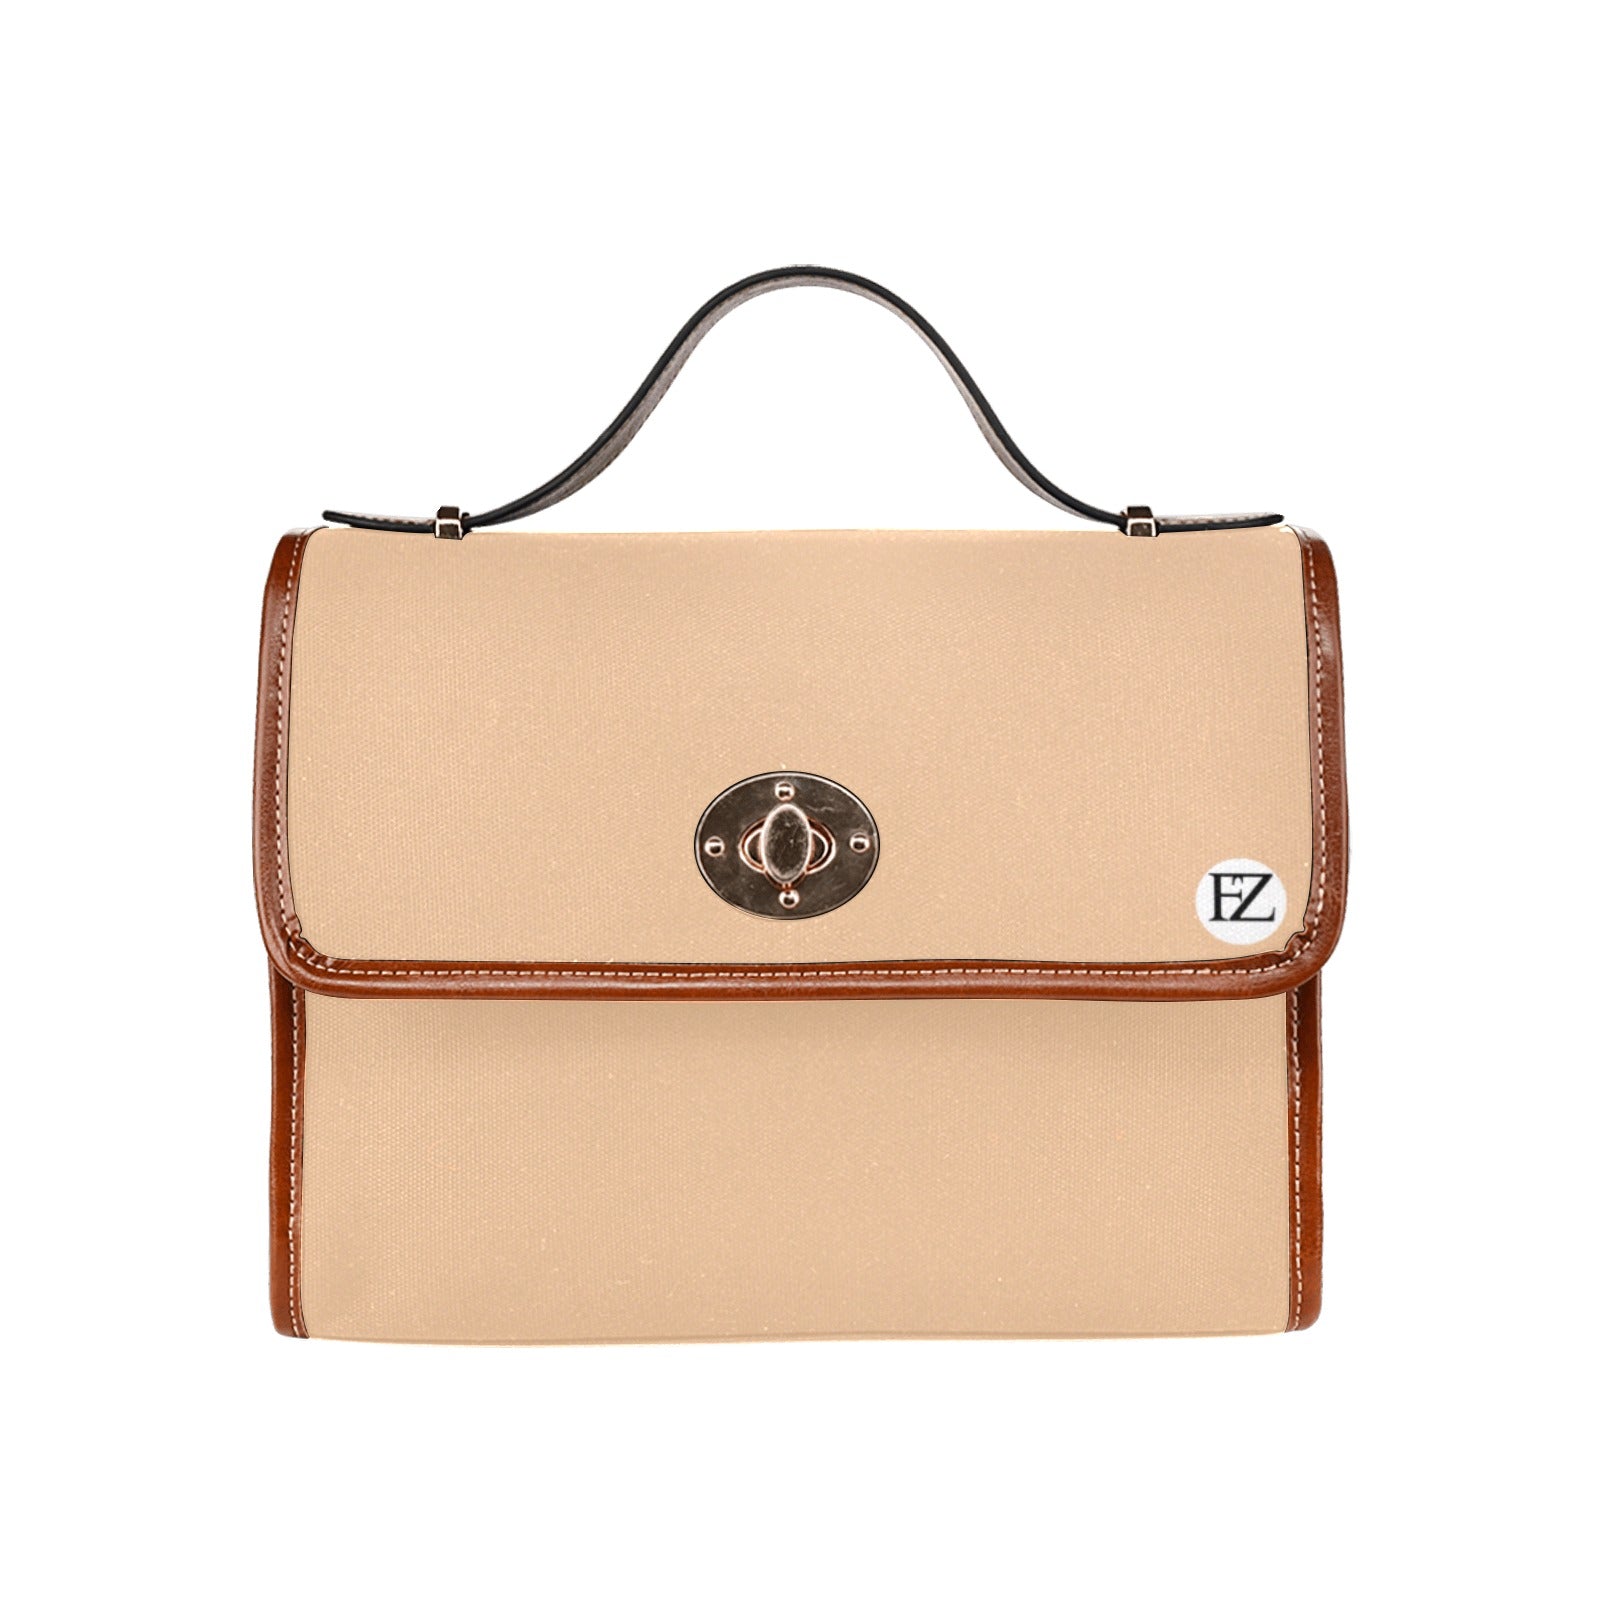 fz original handbag one size / fz - vanilla all over print waterproof canvas bag(model1641)(brown strap)